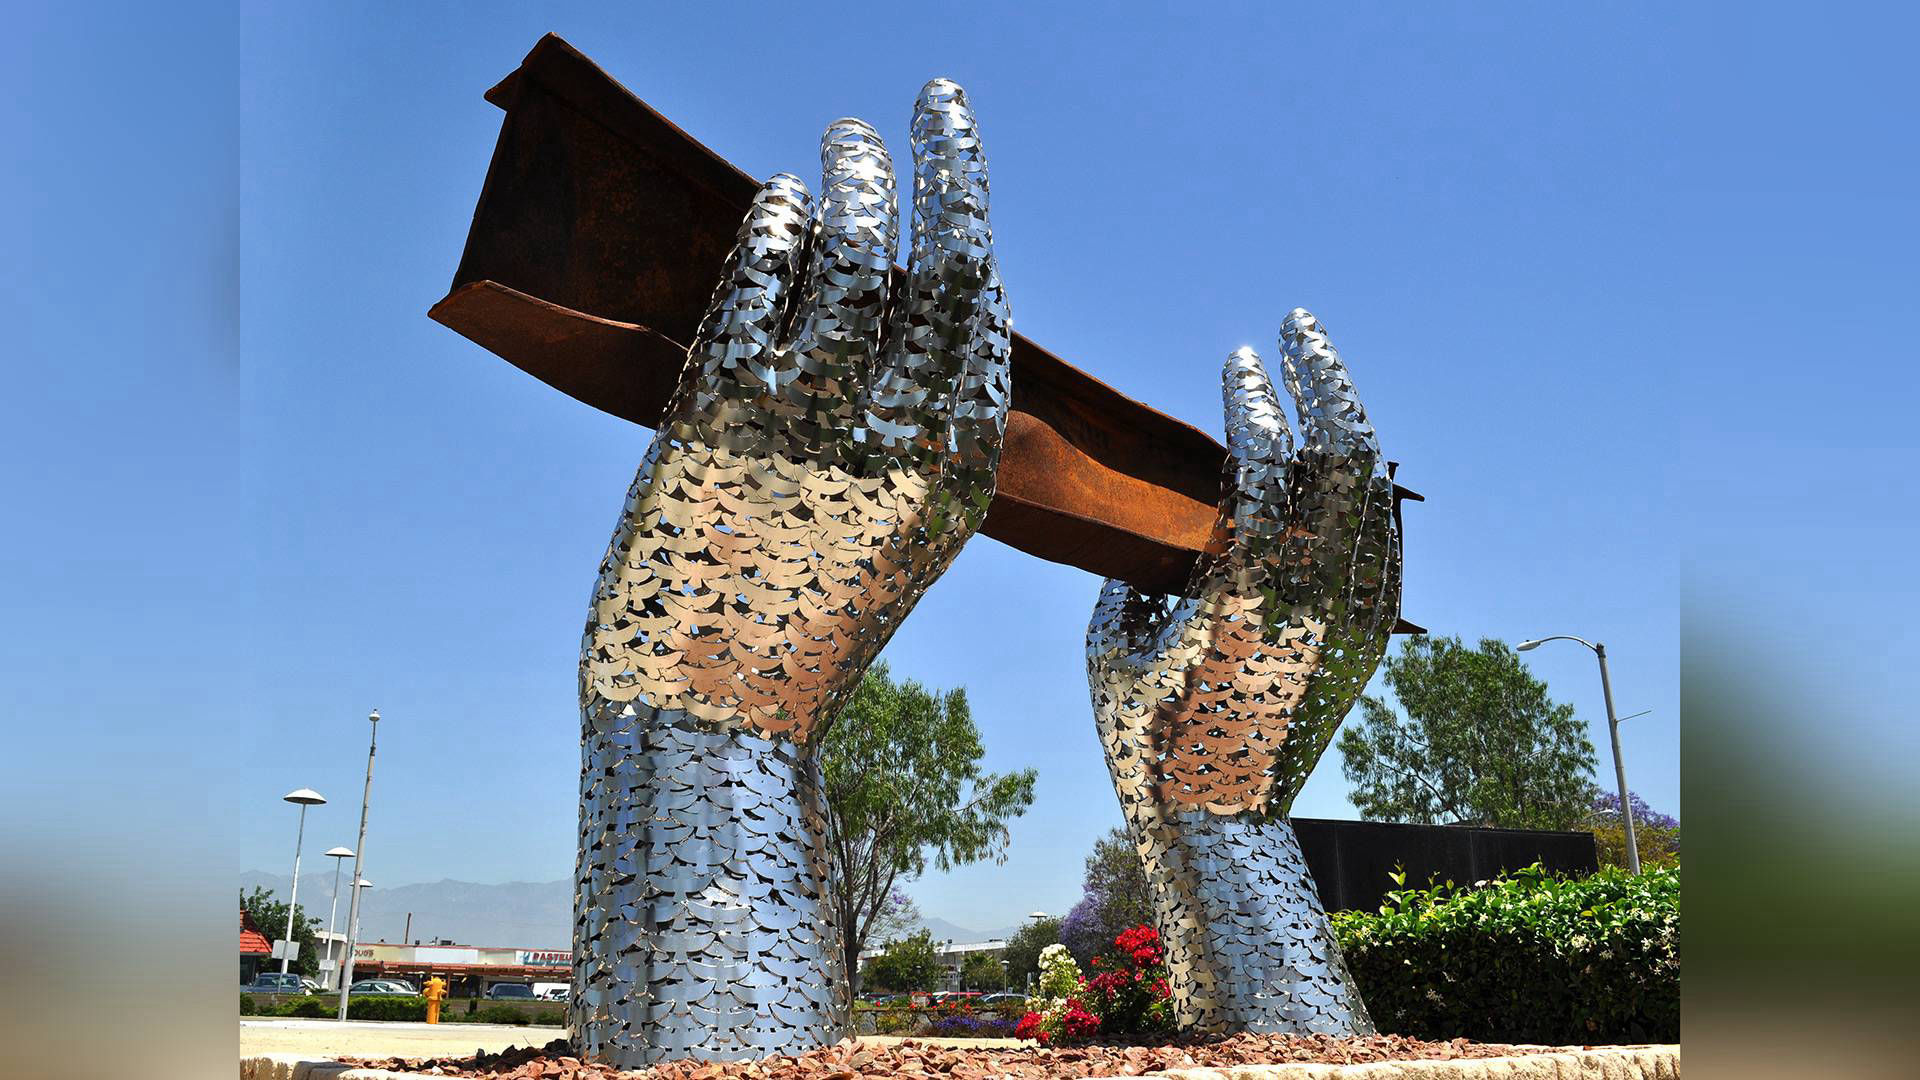 911 Memorial - stainless steel WTC public art sculpture by Heath Satow Rosemead CA